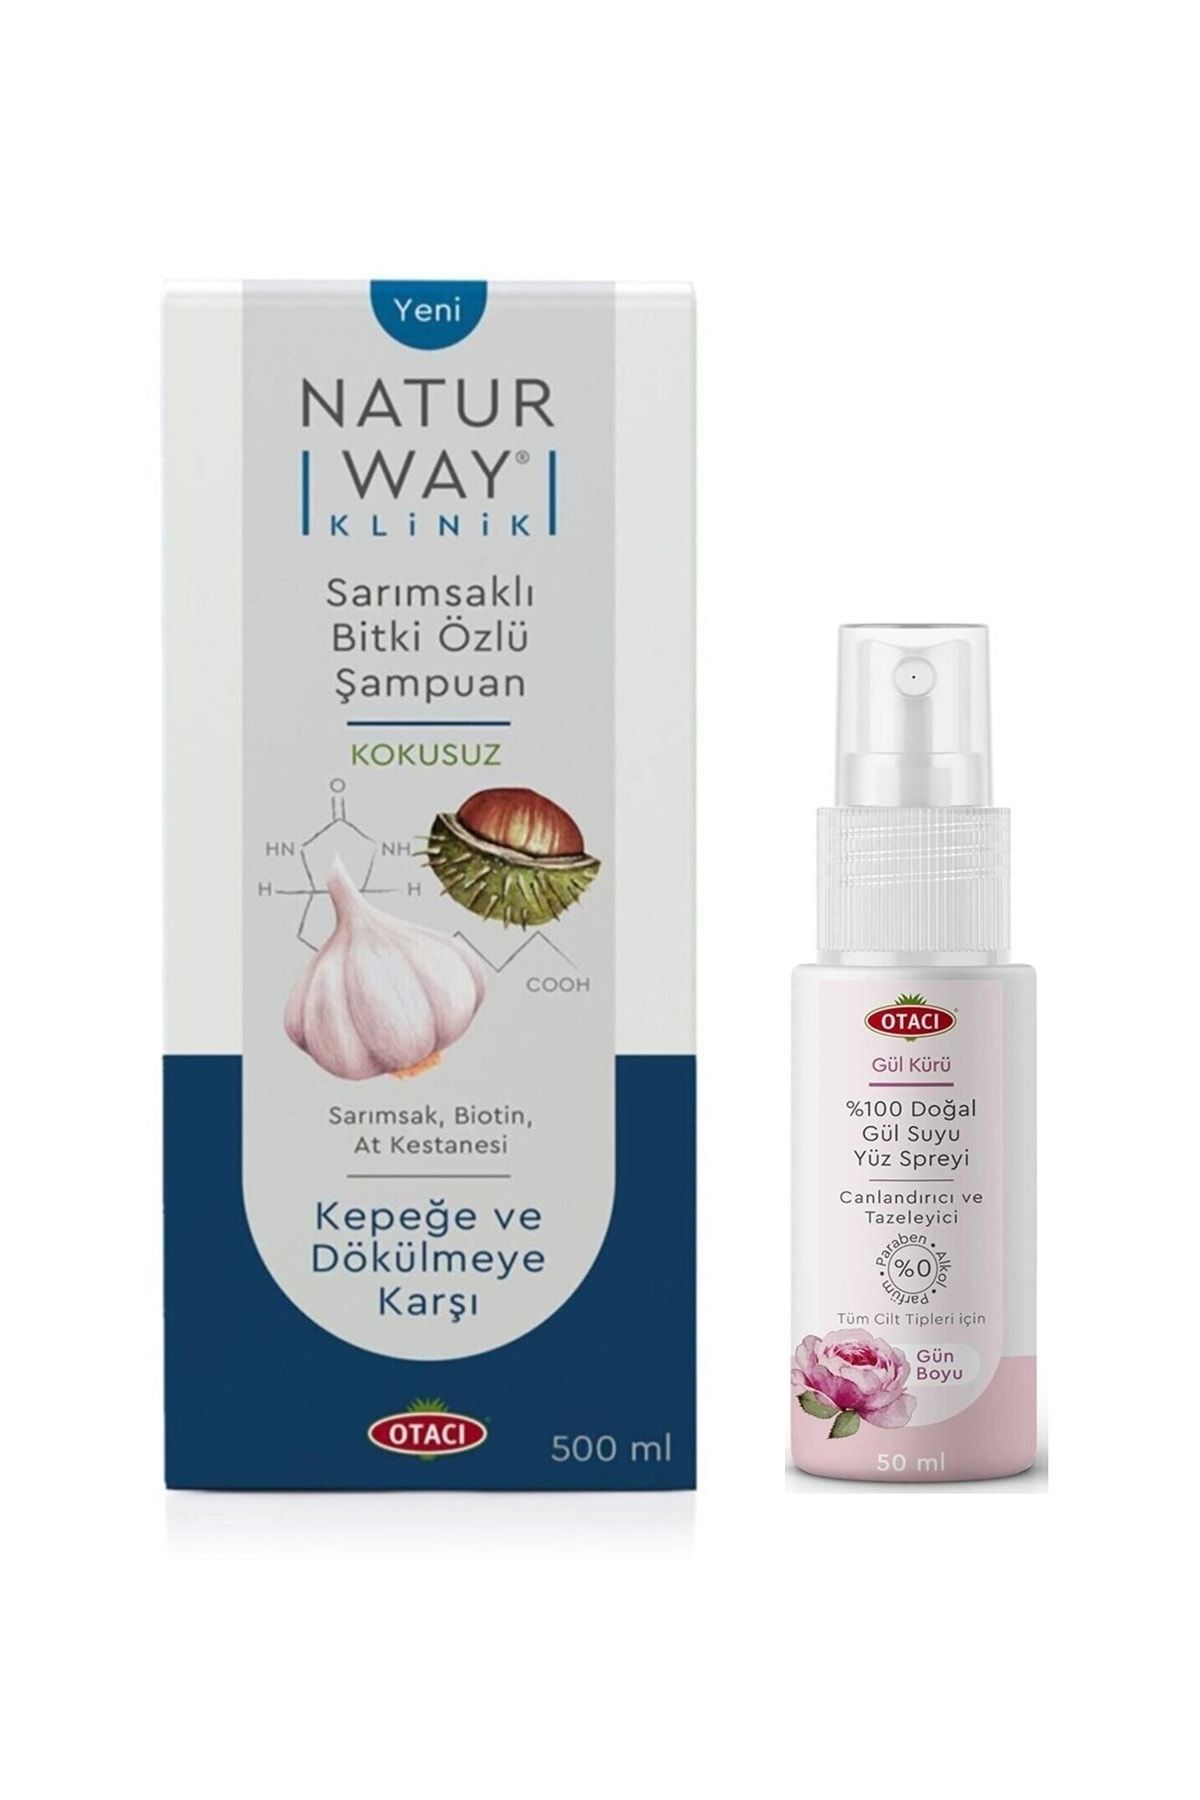 Otacı Naturway Klinik Sarımsaklı Şampuan 500 Ml + %100 Doğal Gül Suyu Yüz Spreyi 50ml